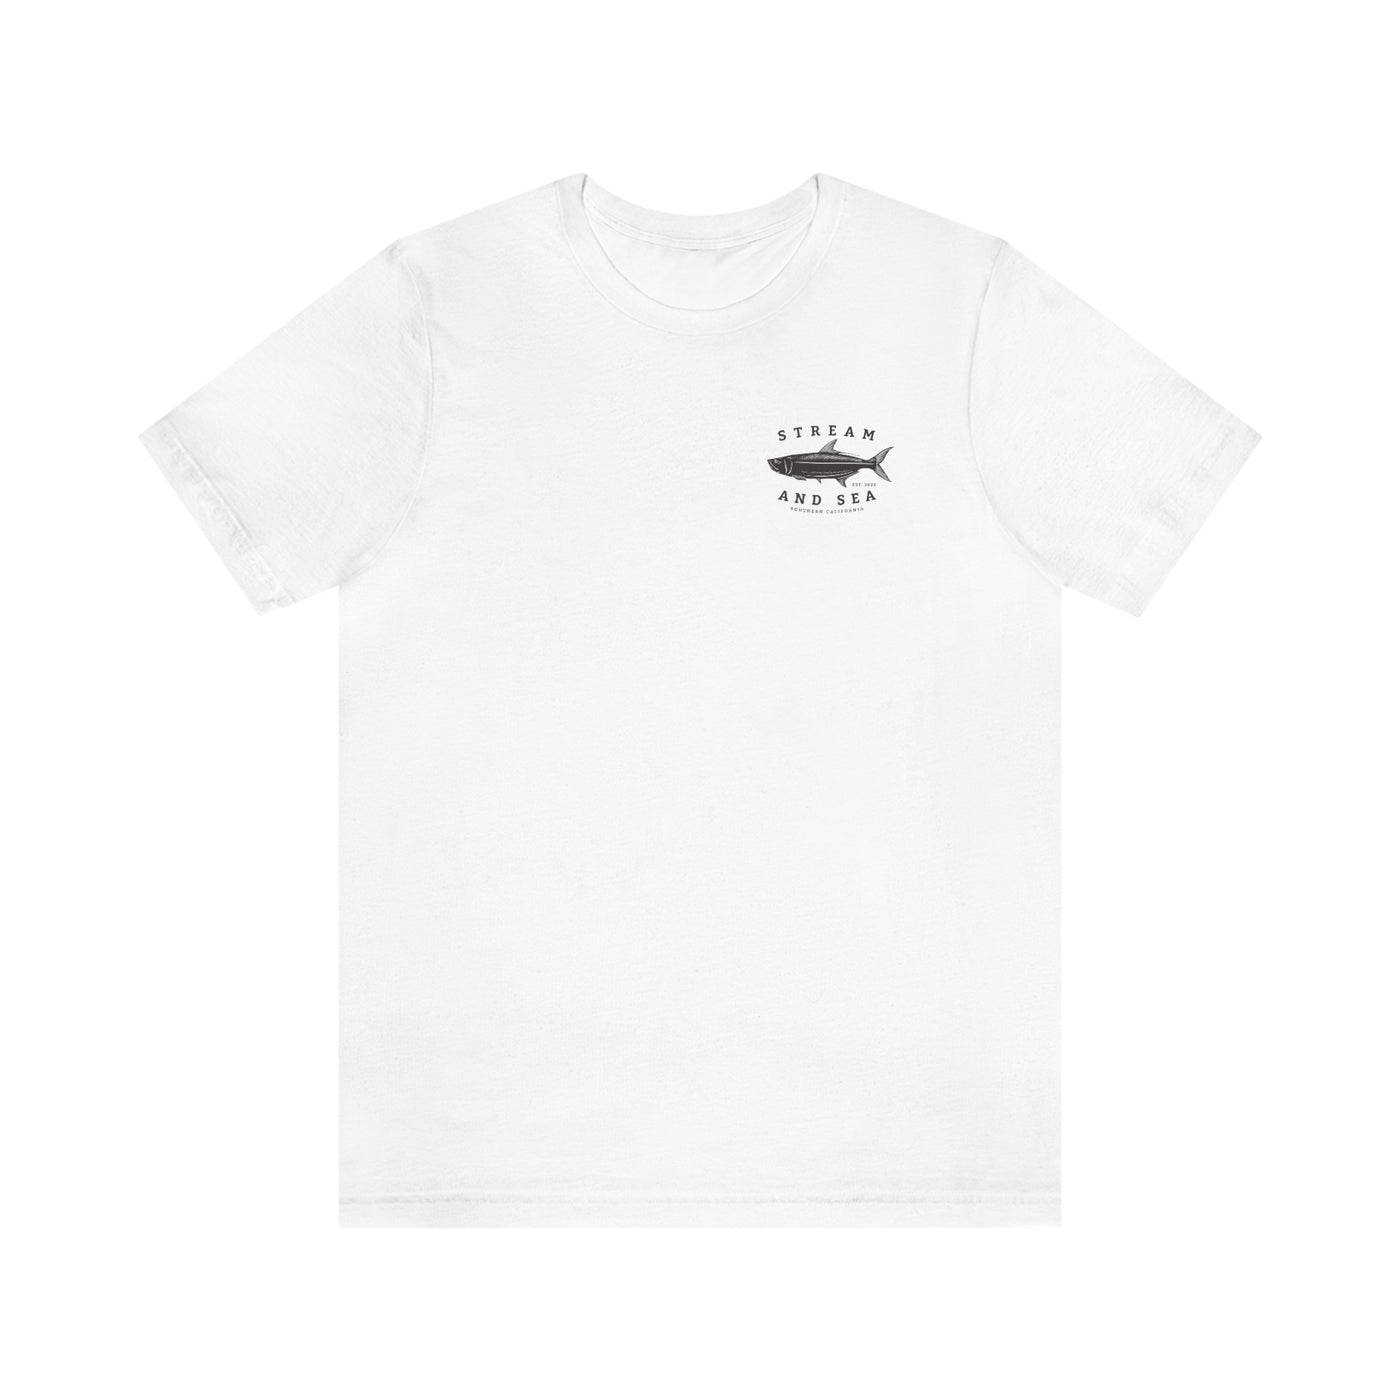 Stream & Sea T-Shirt